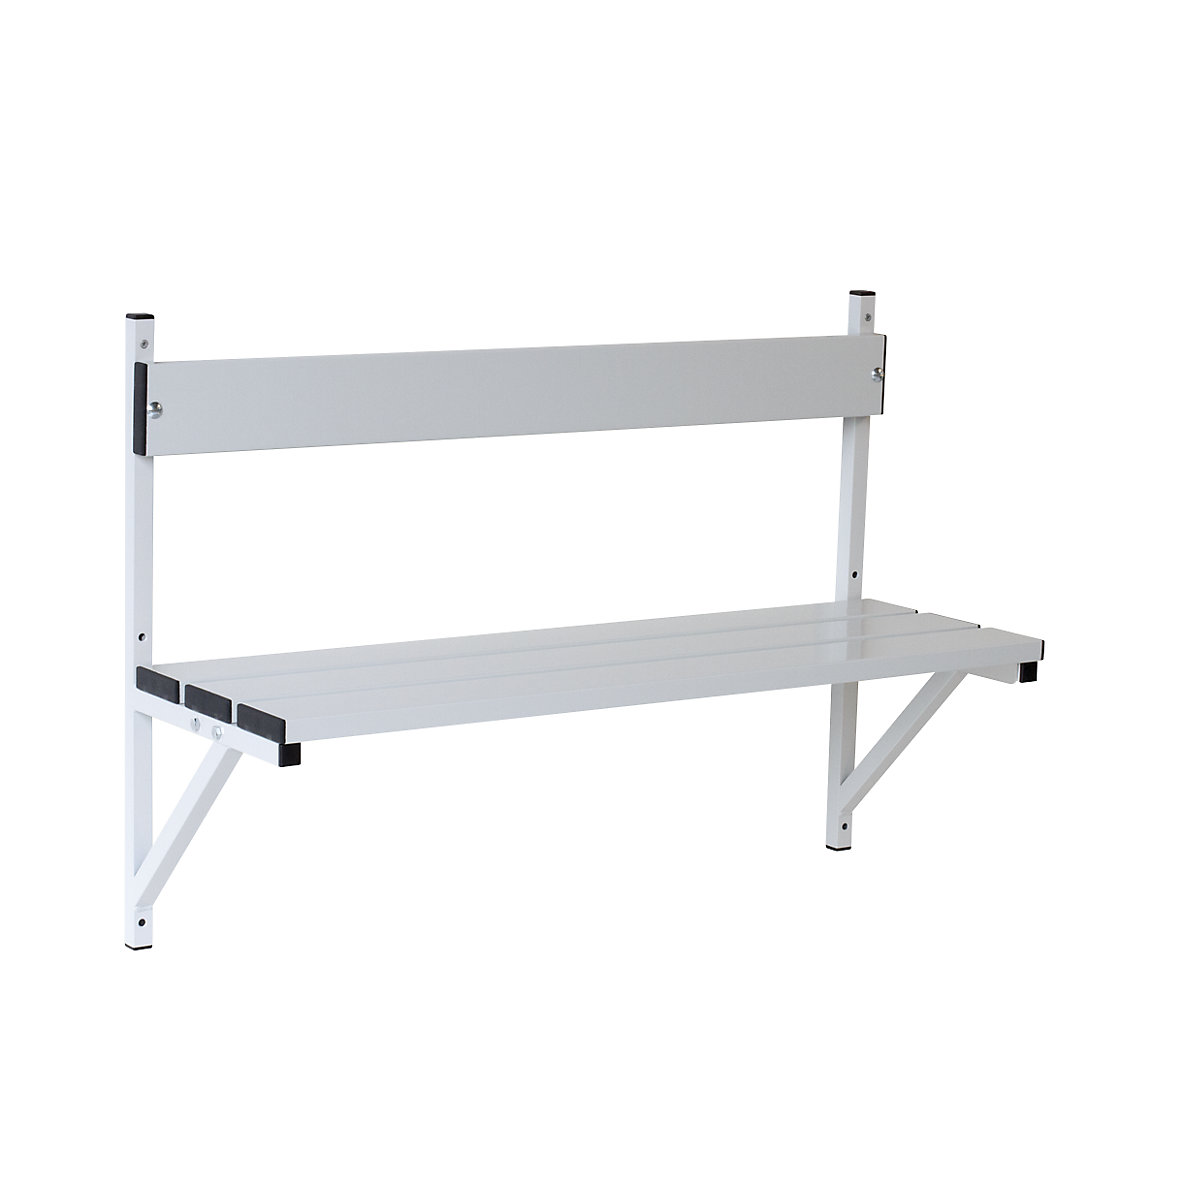 Sypro – Wall mounted bench